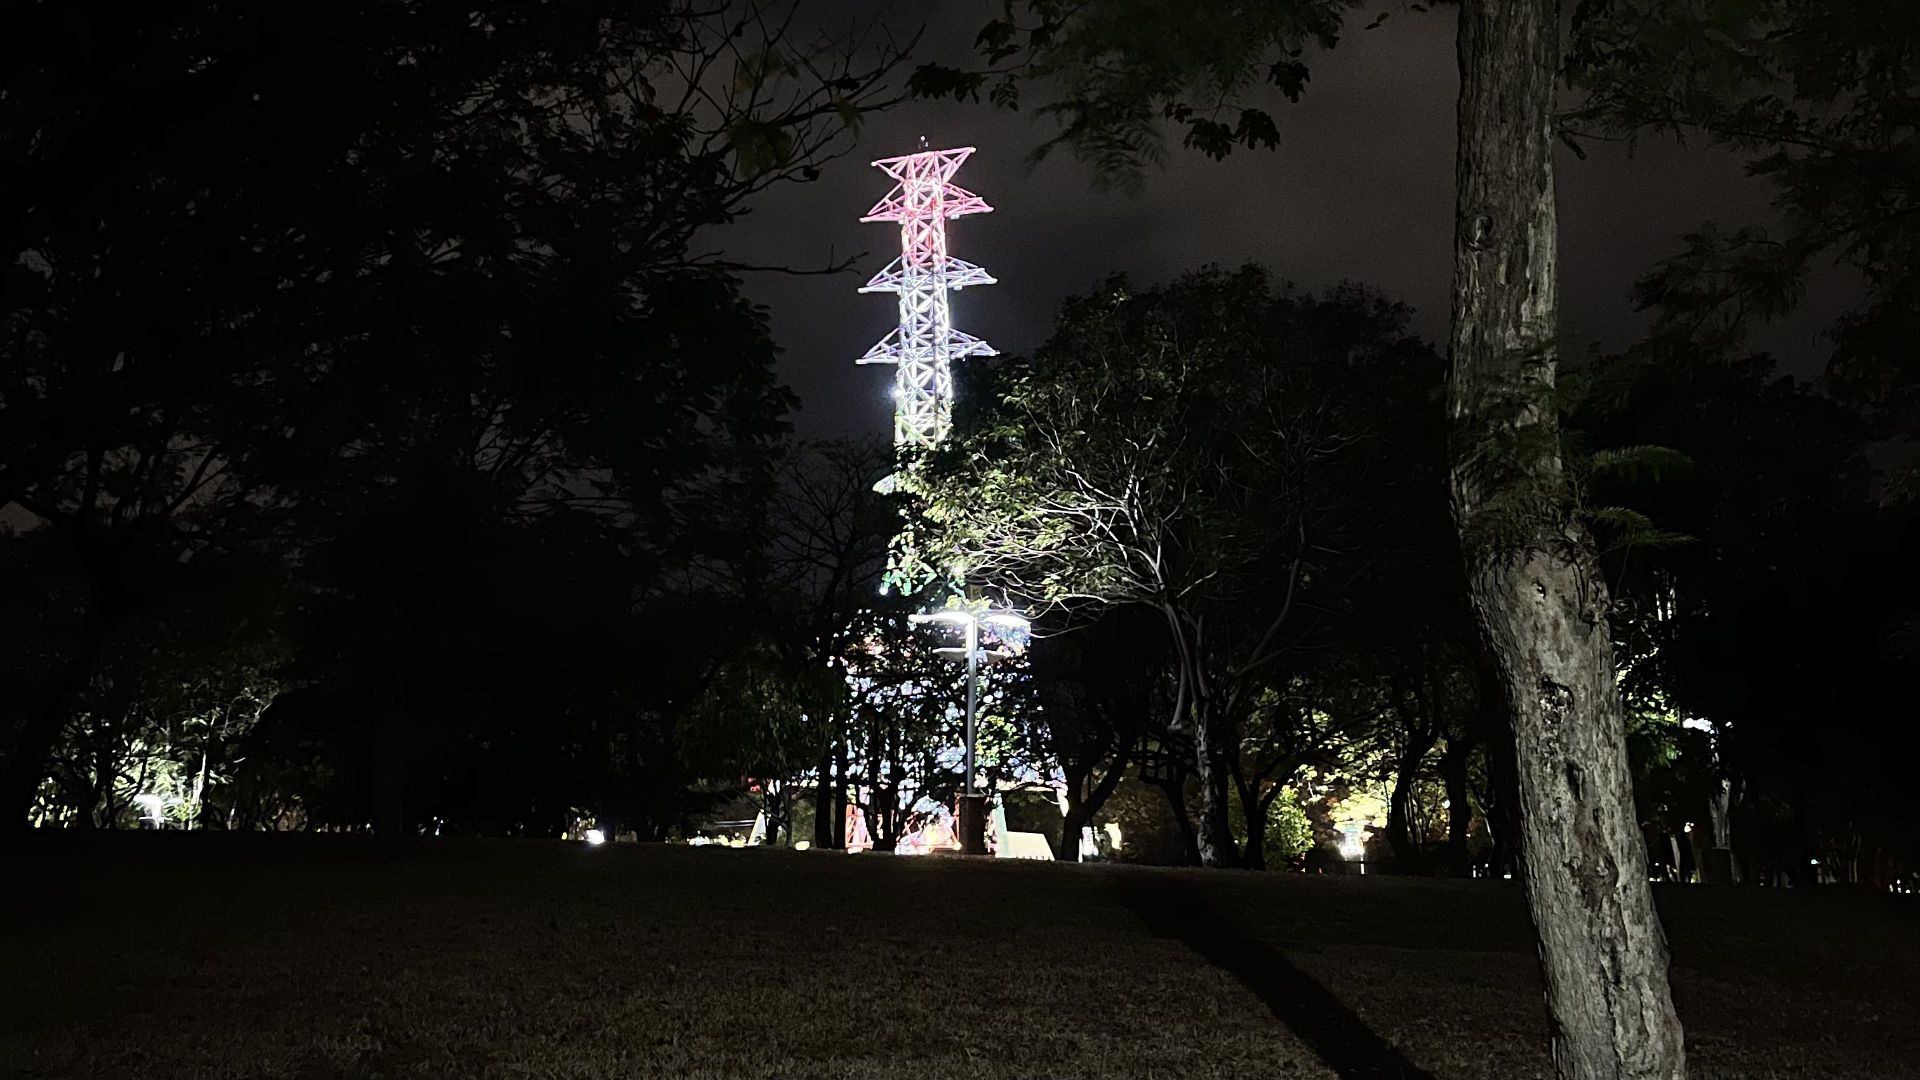 An illuminated pylon visible through the trees.